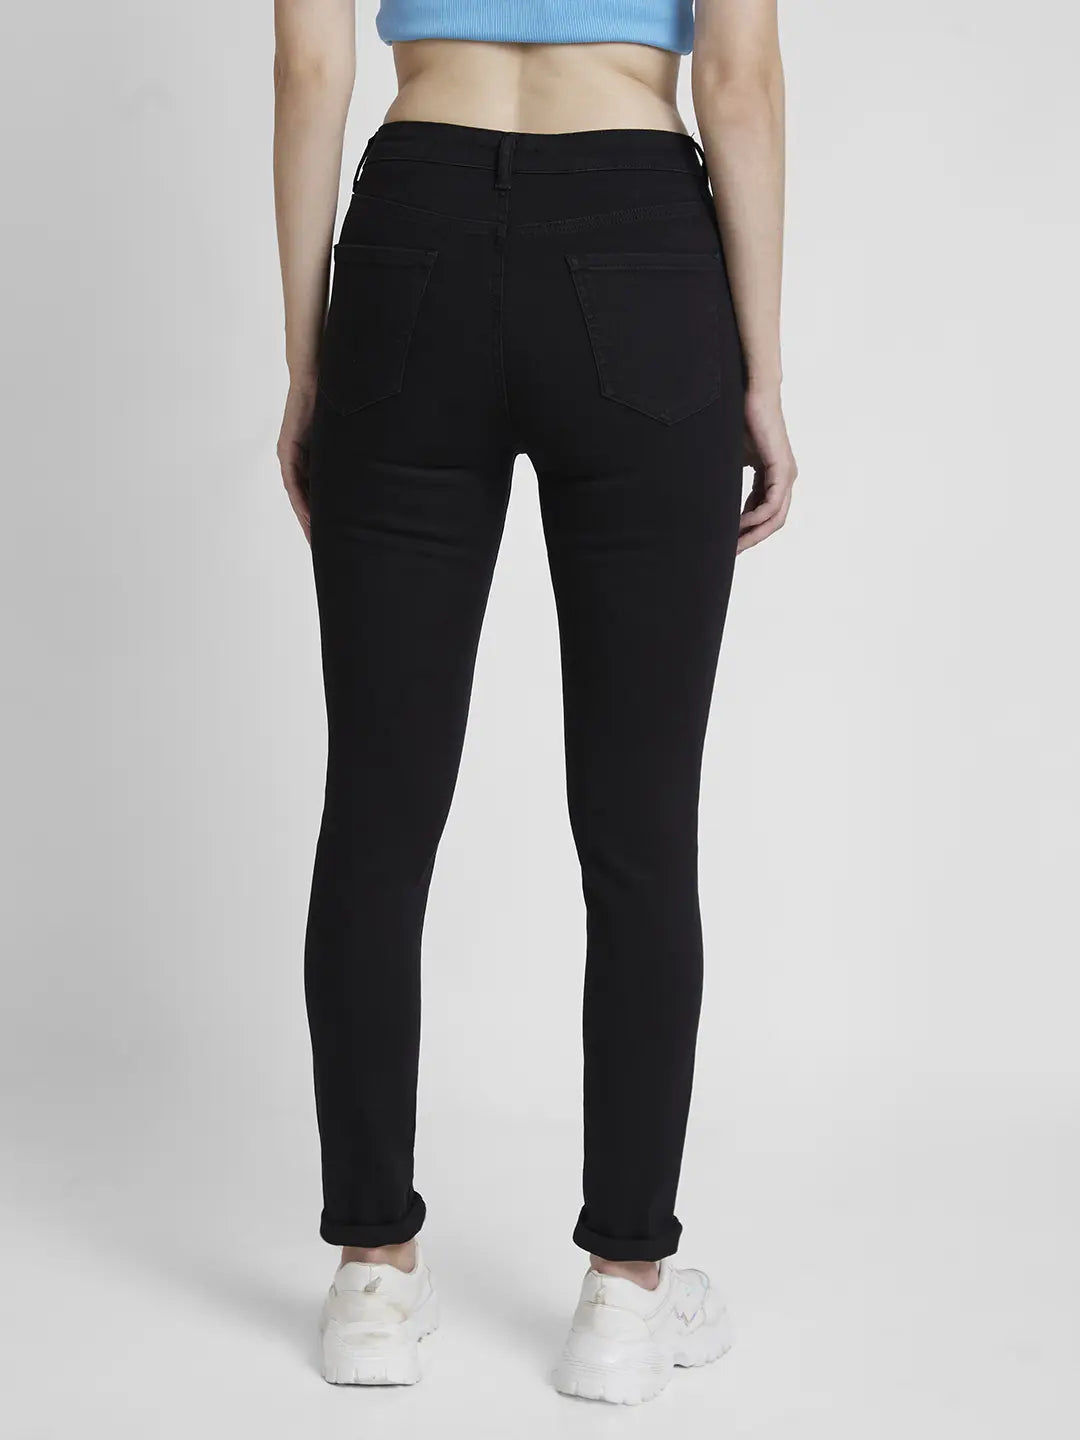 Spykar Women Raw Black Lycra Skinny Fit Regular Length Clean Look Jeans -(Adora)